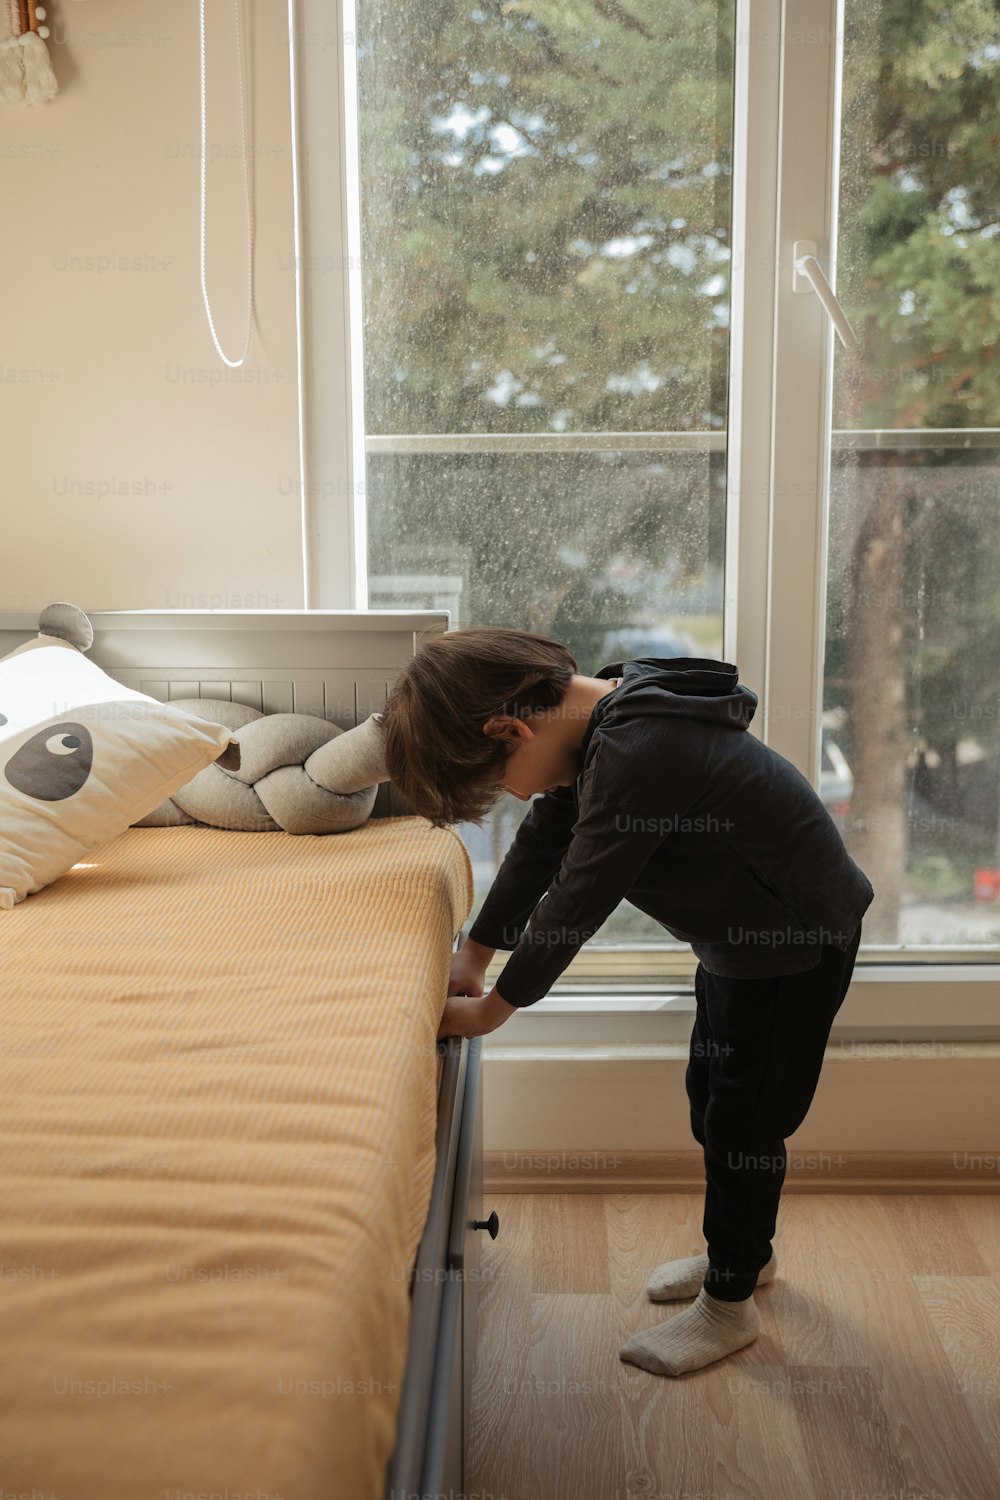 Una niña se inclina para recoger una almohada